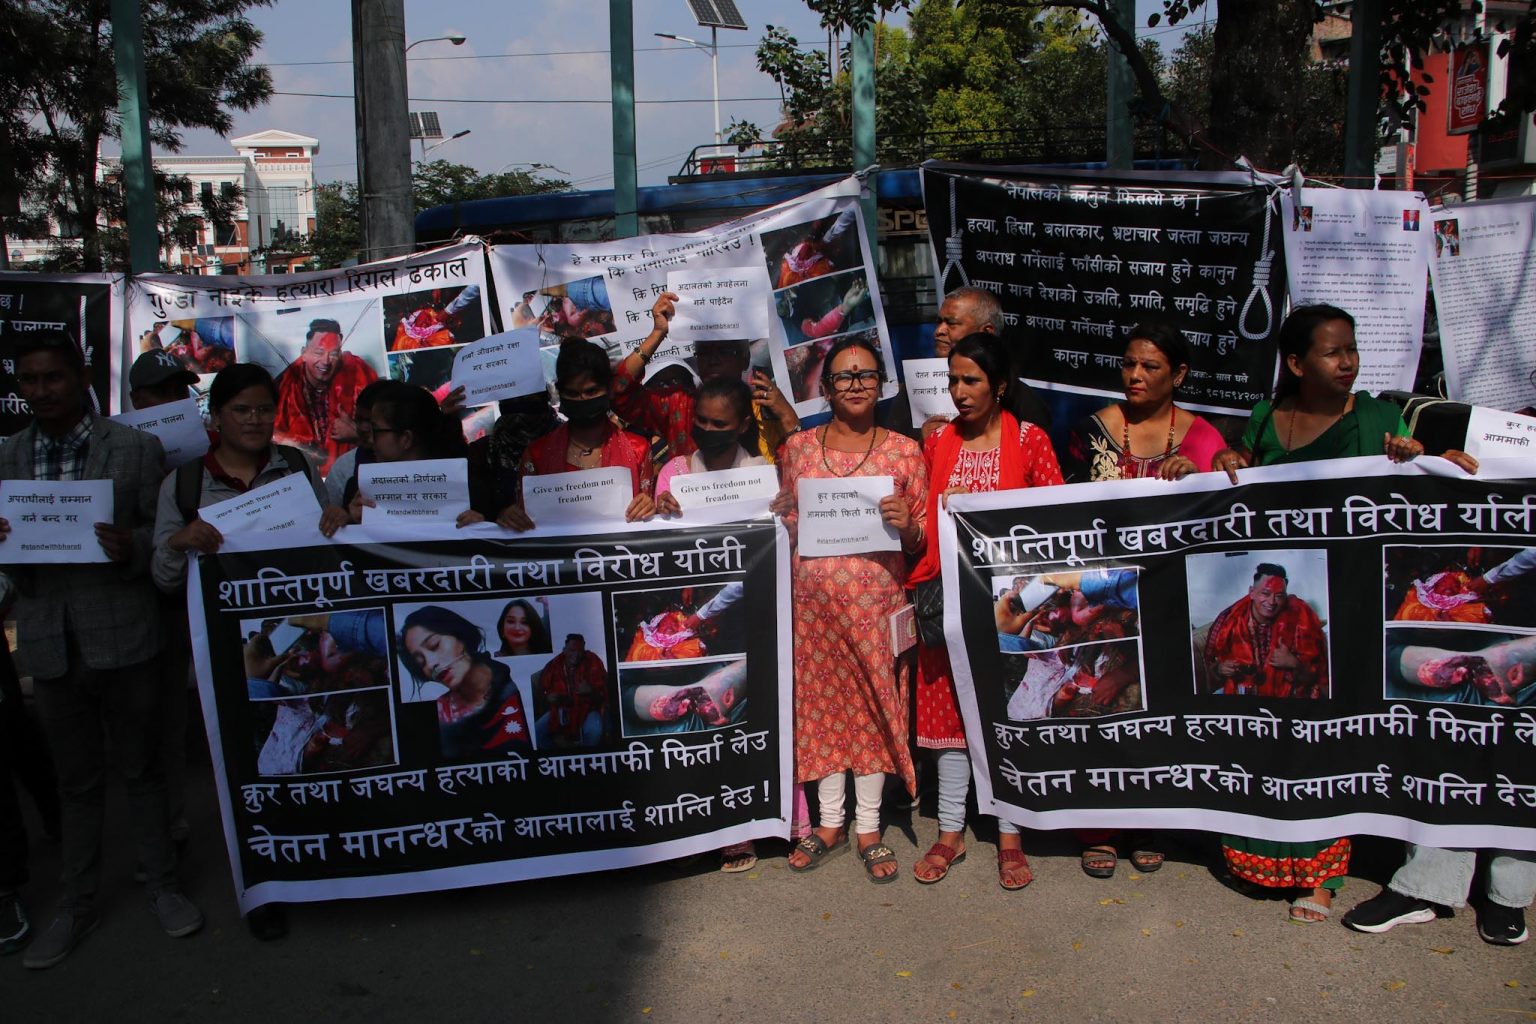 Bharti, Manandhar Samaj & Youth Activists protest demanding President’s resignation (photos)